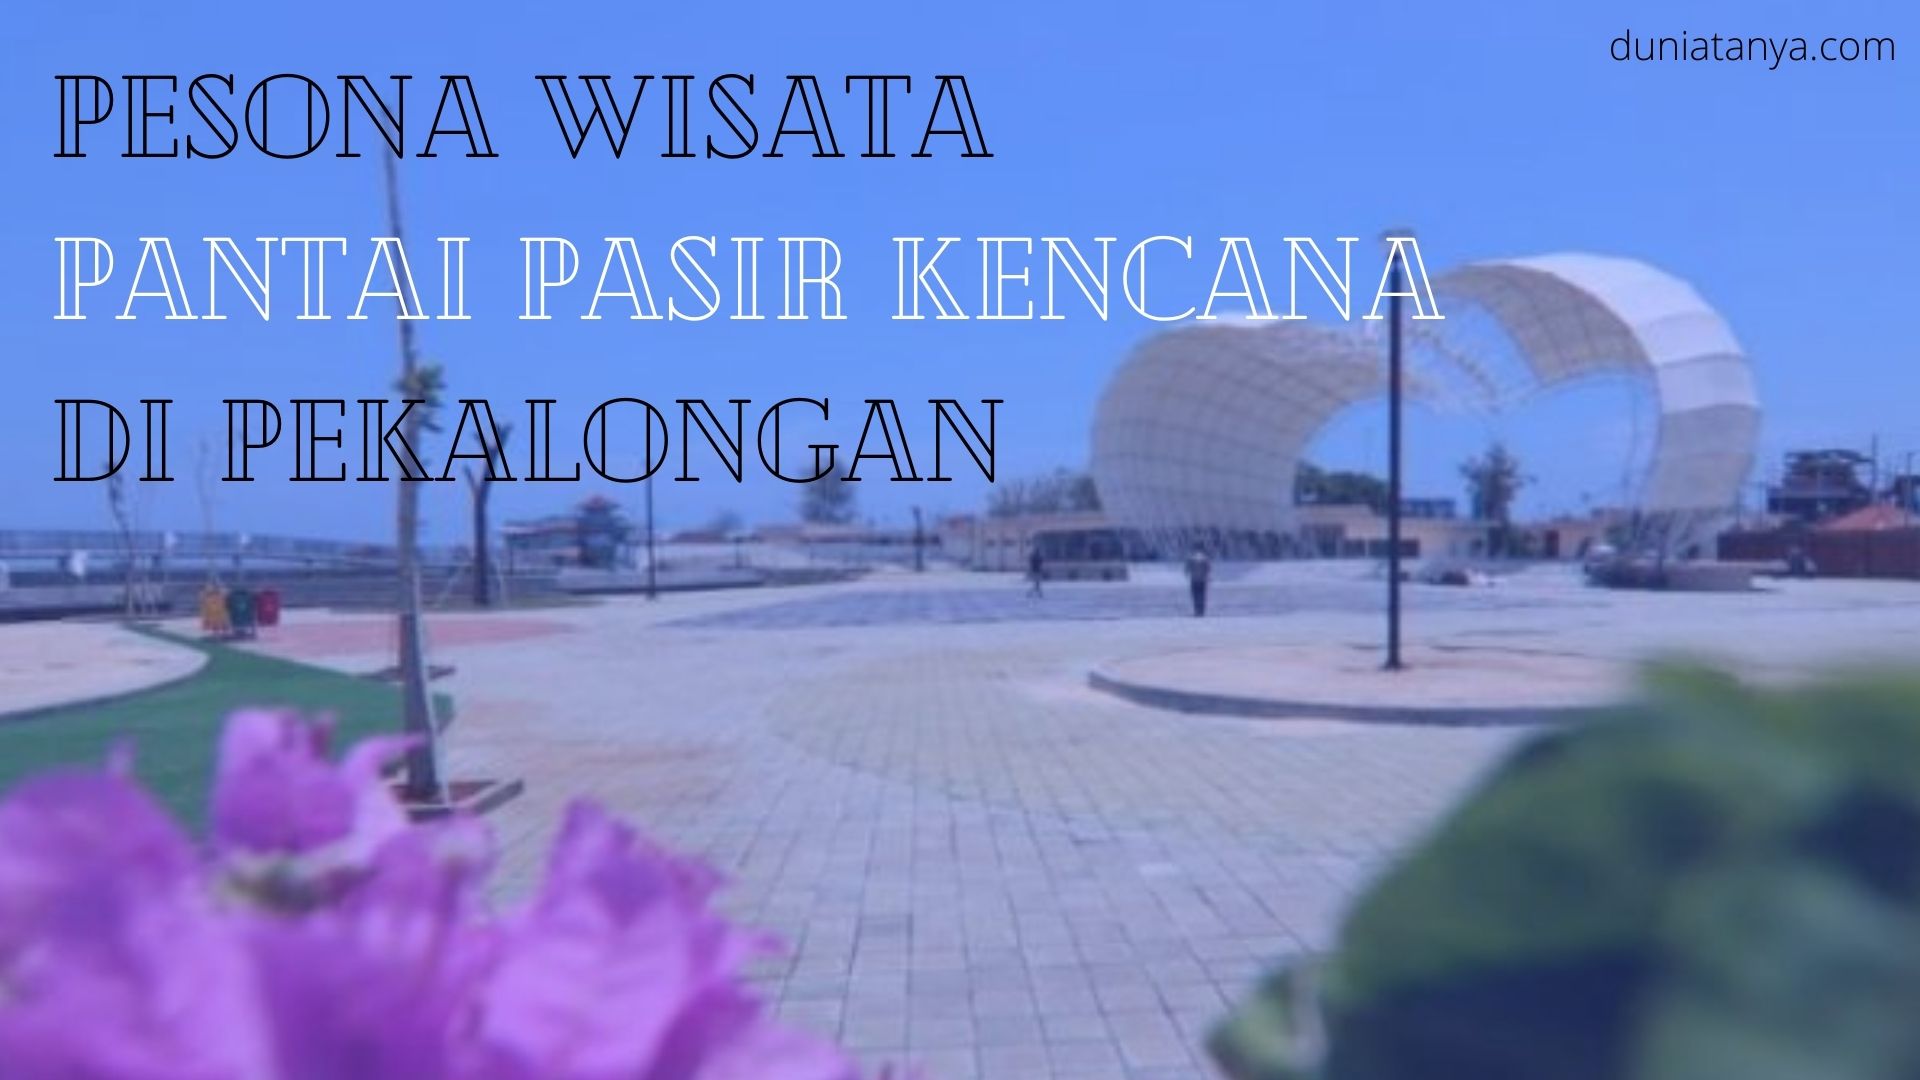 You are currently viewing Pesona Wisata Pantai Pasir Kencana Di Pekalongan